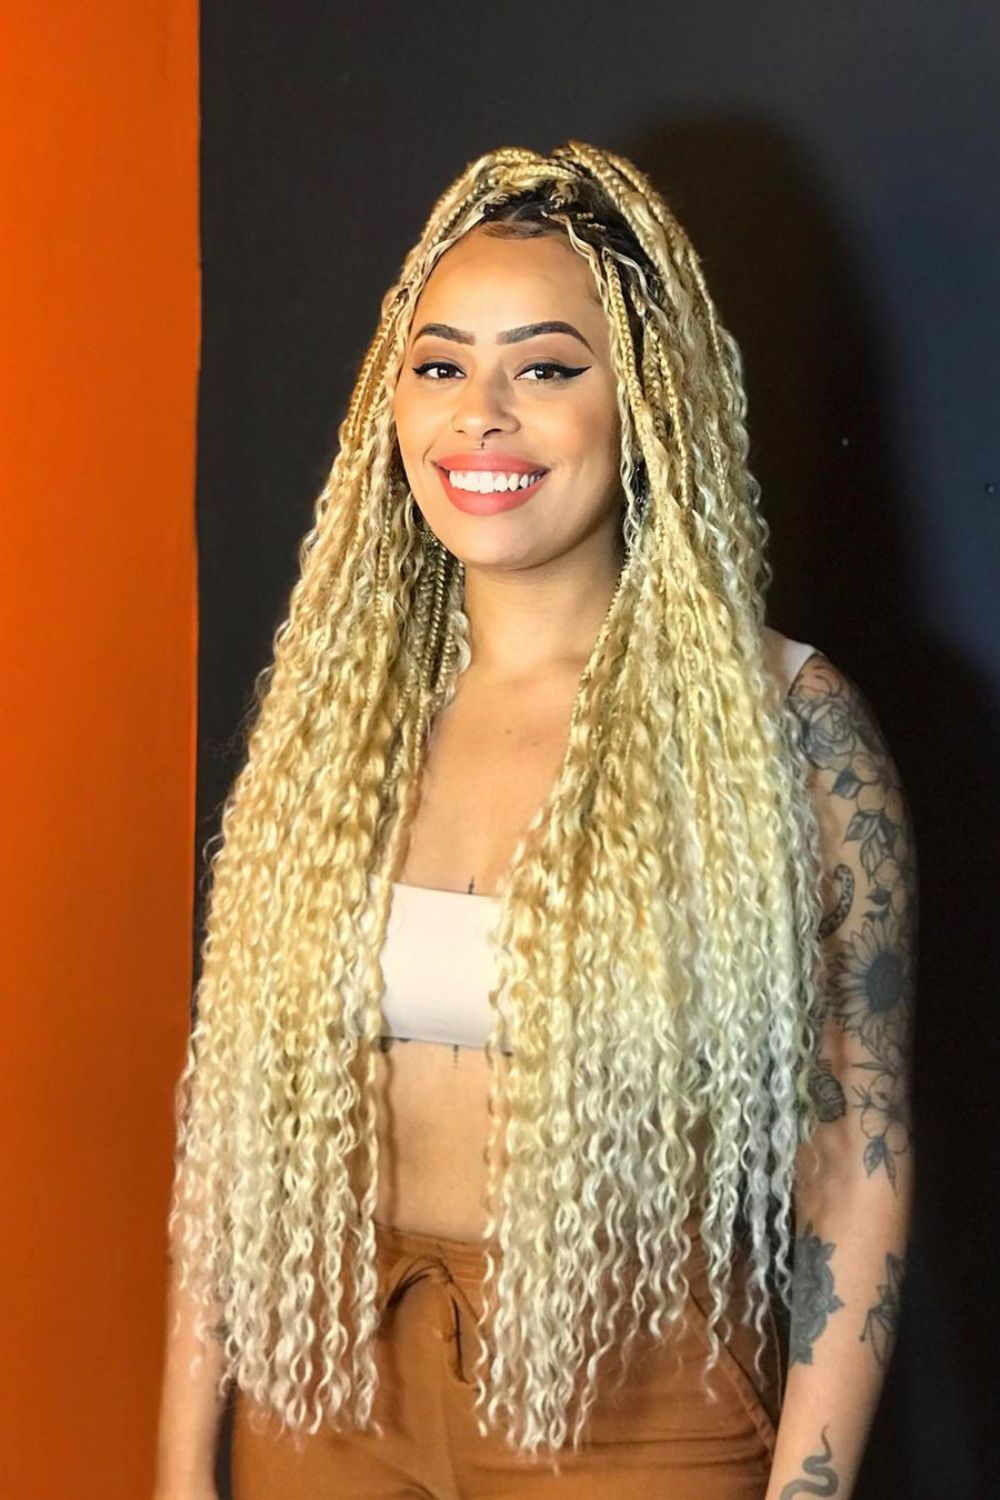 A woman with long blonde goddess braids.